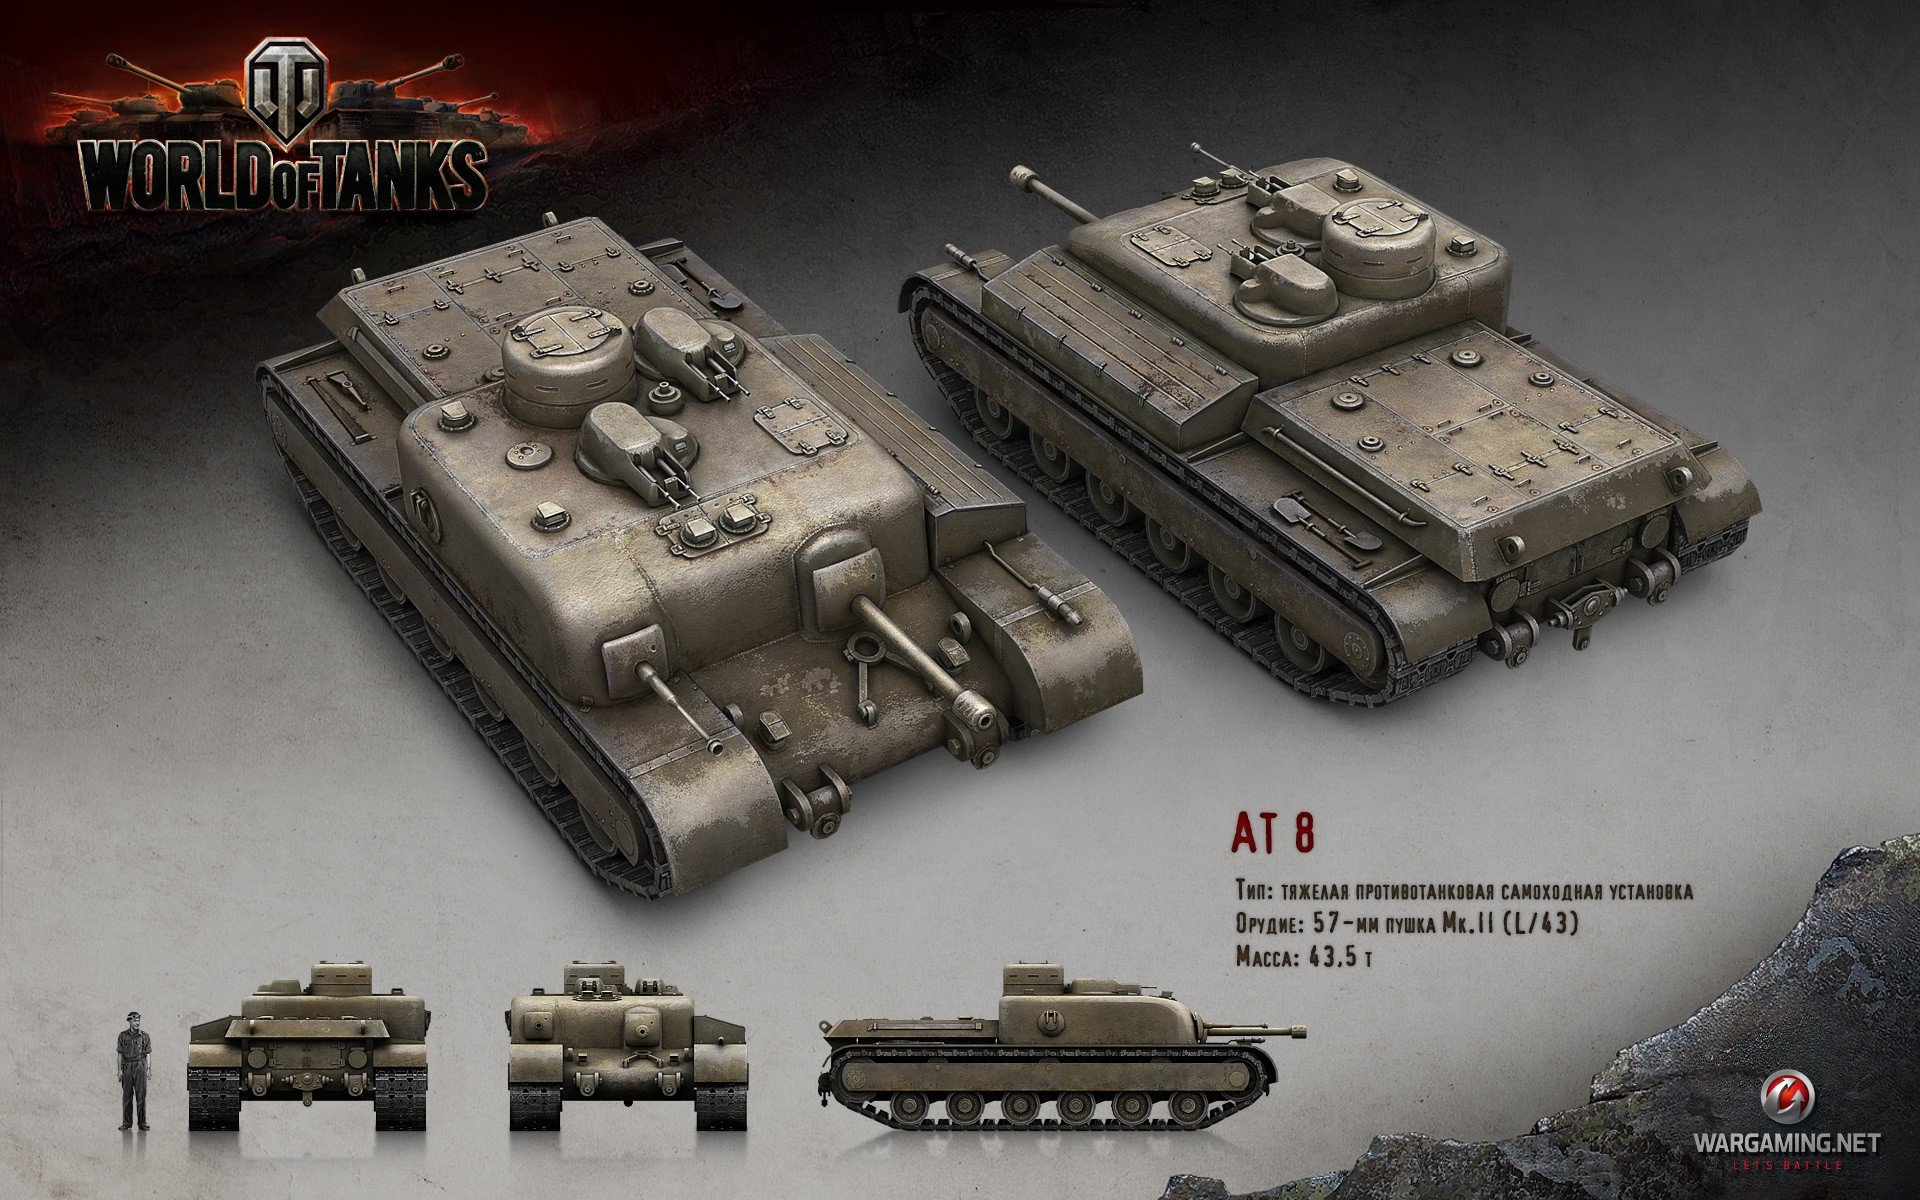 World of Tanks, Tank, Wargaming, AT 8 Wallpaper